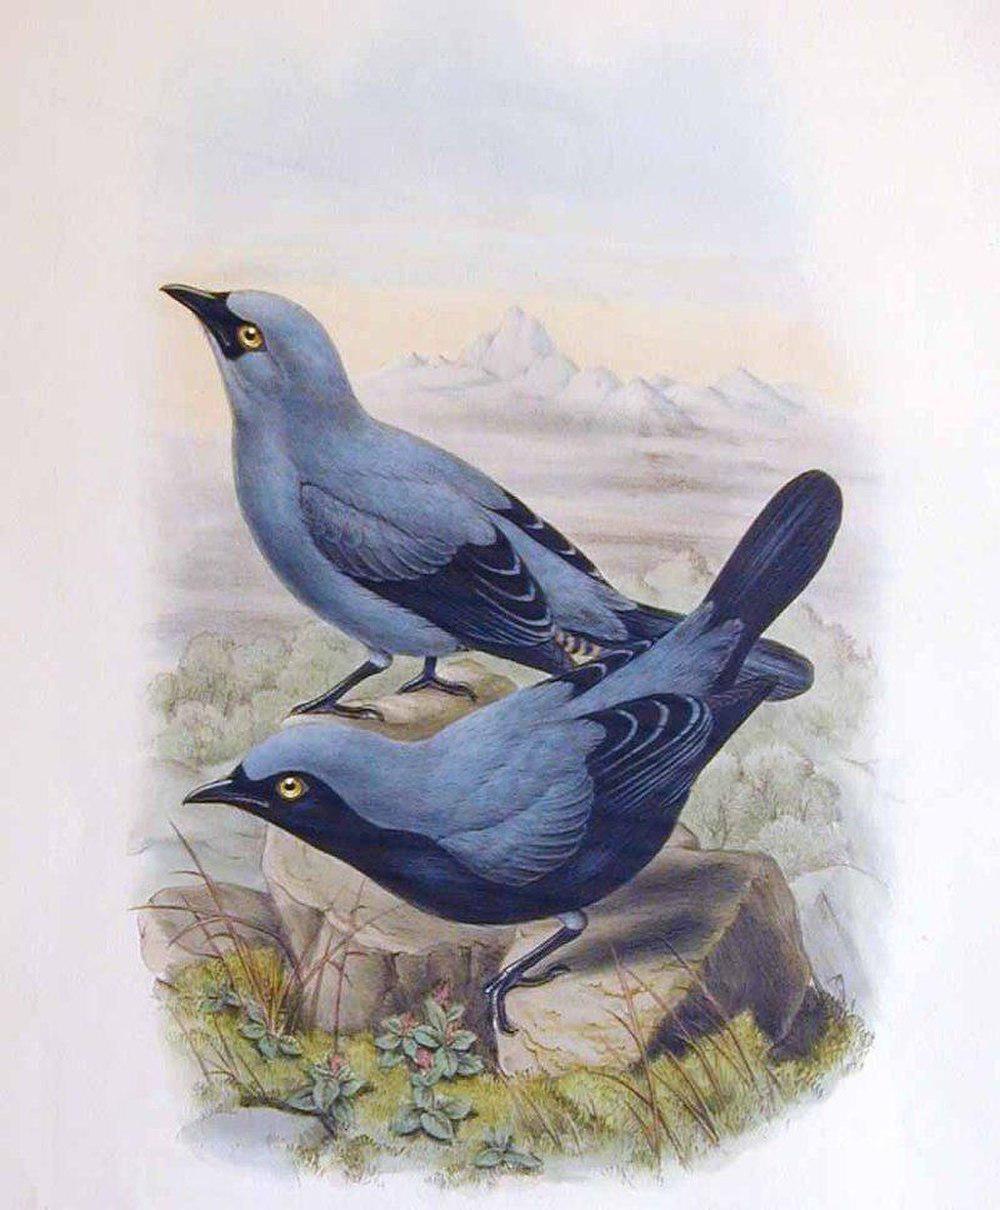 高山鹃鵙 / Black-bellied Cuckooshrike / Edolisoma montanum